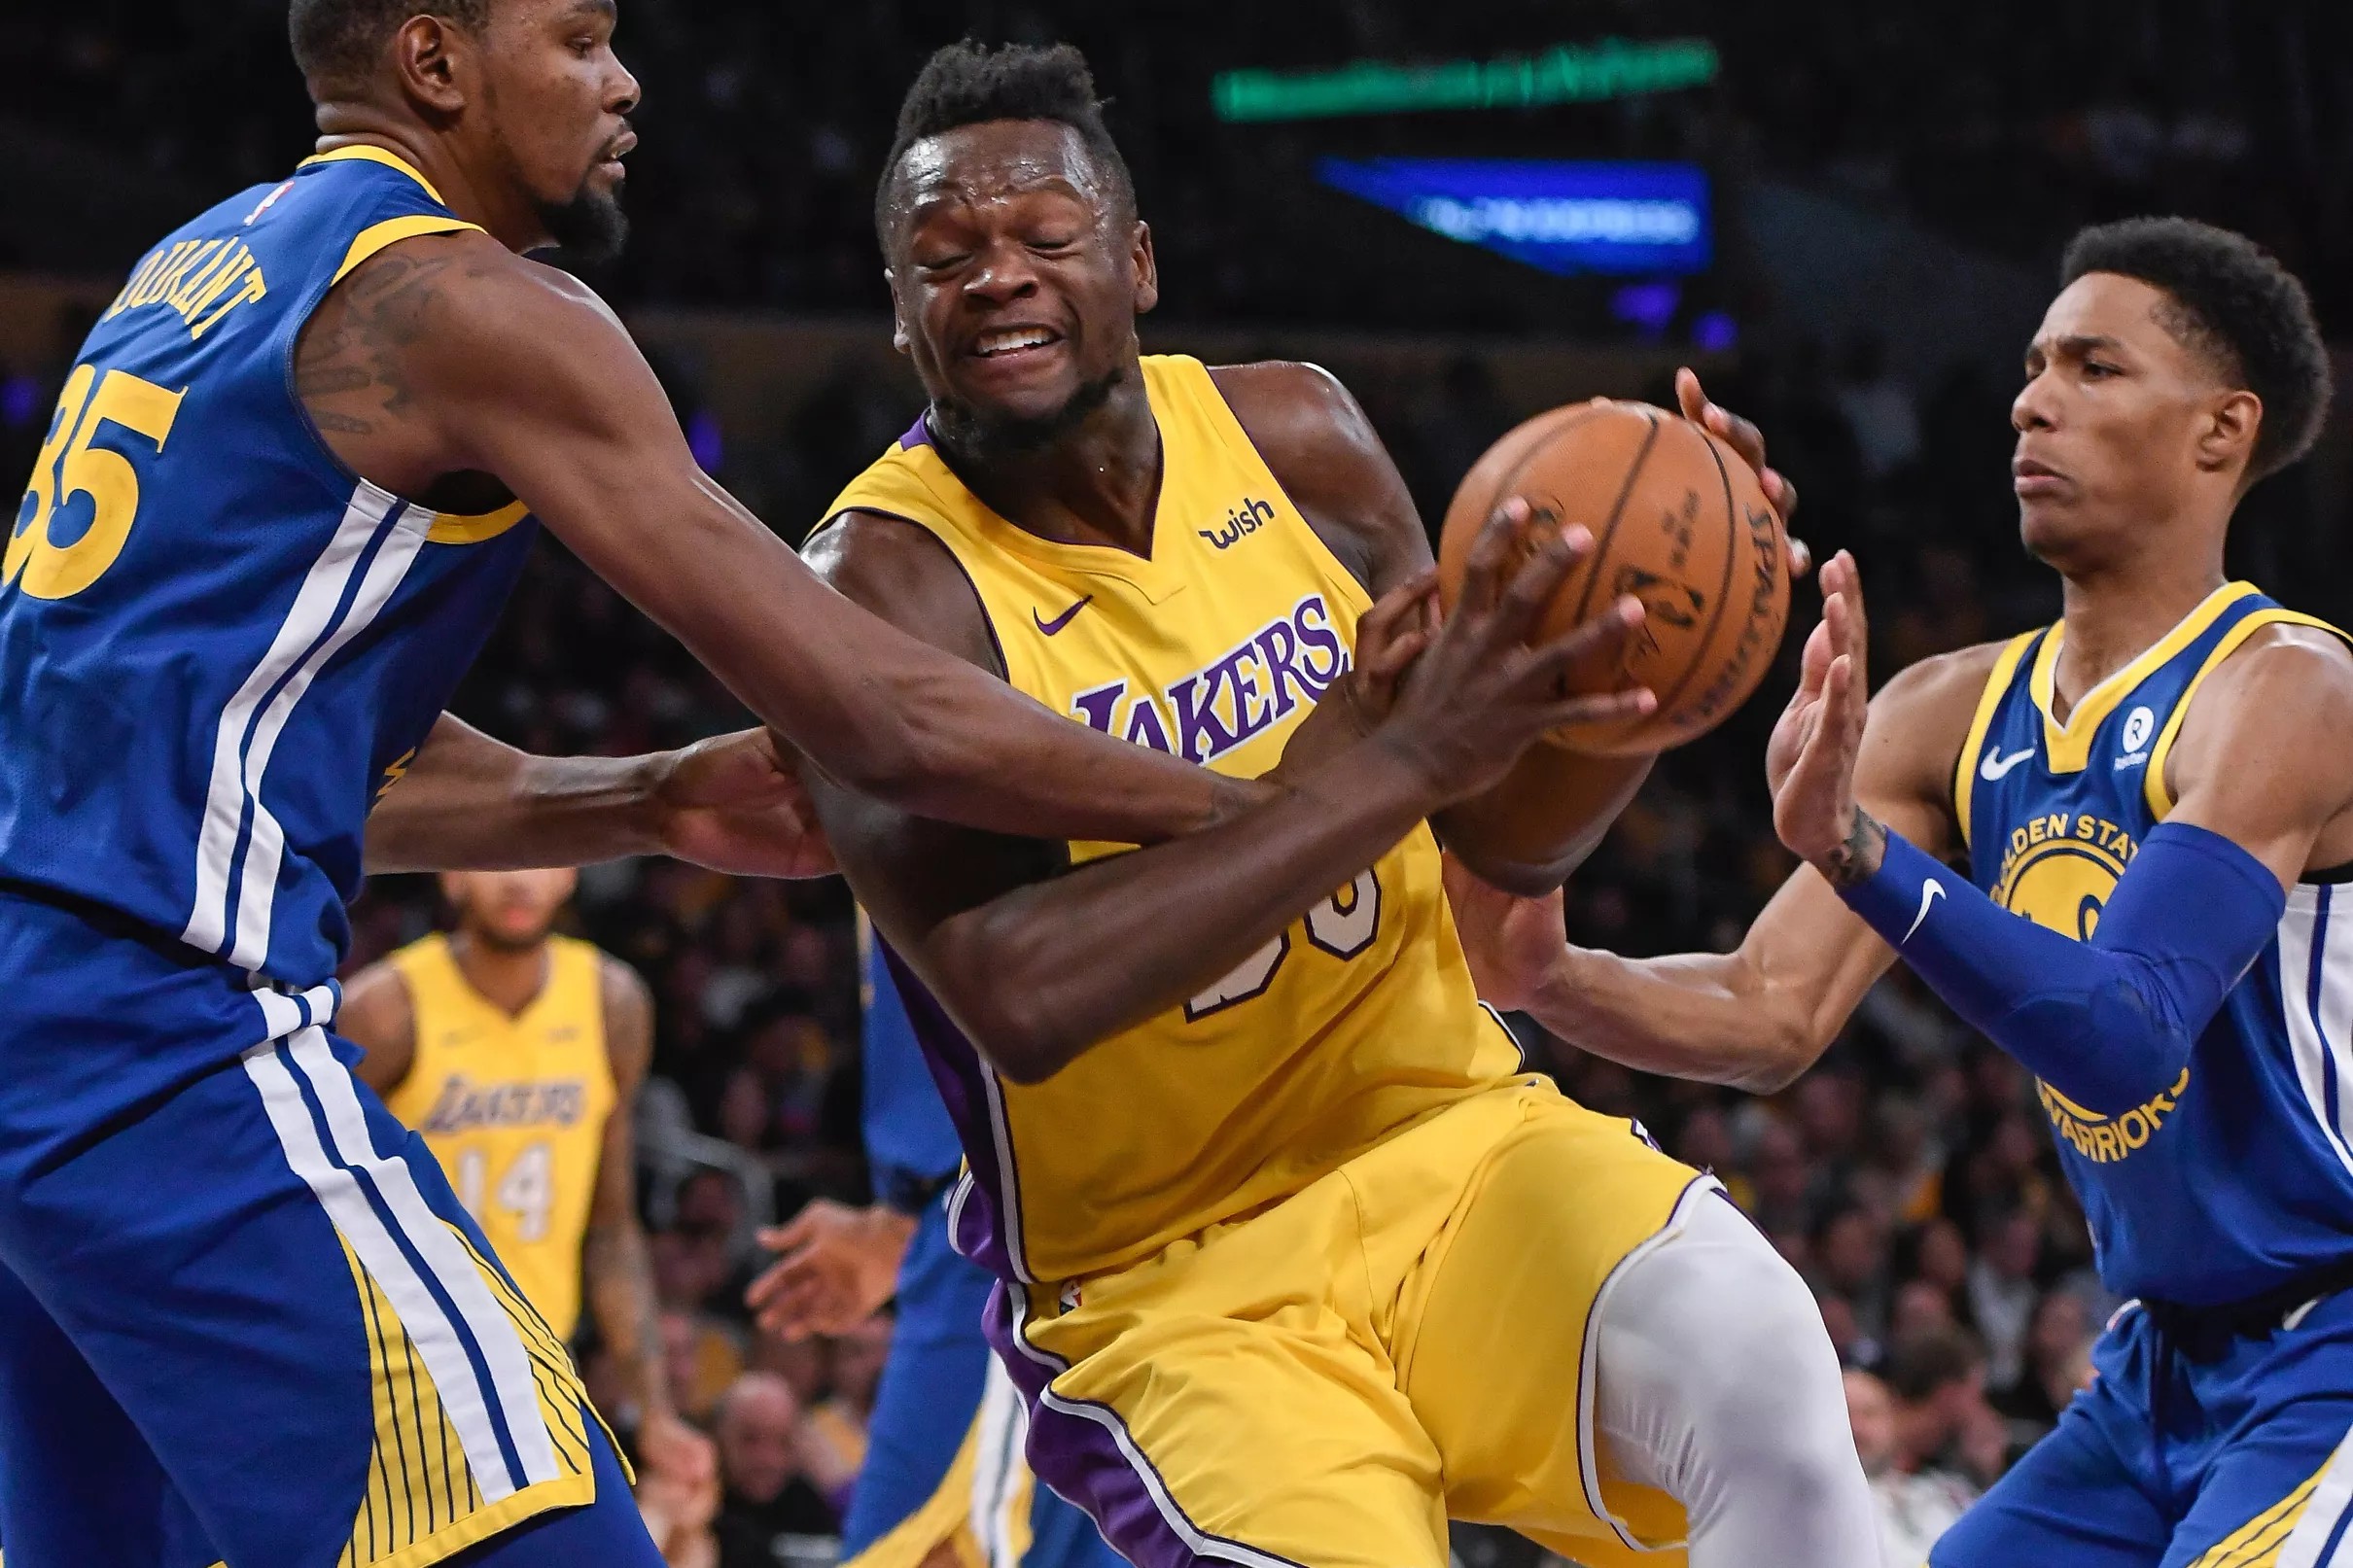 The Warriors win streak faces the Lakers streakbusters